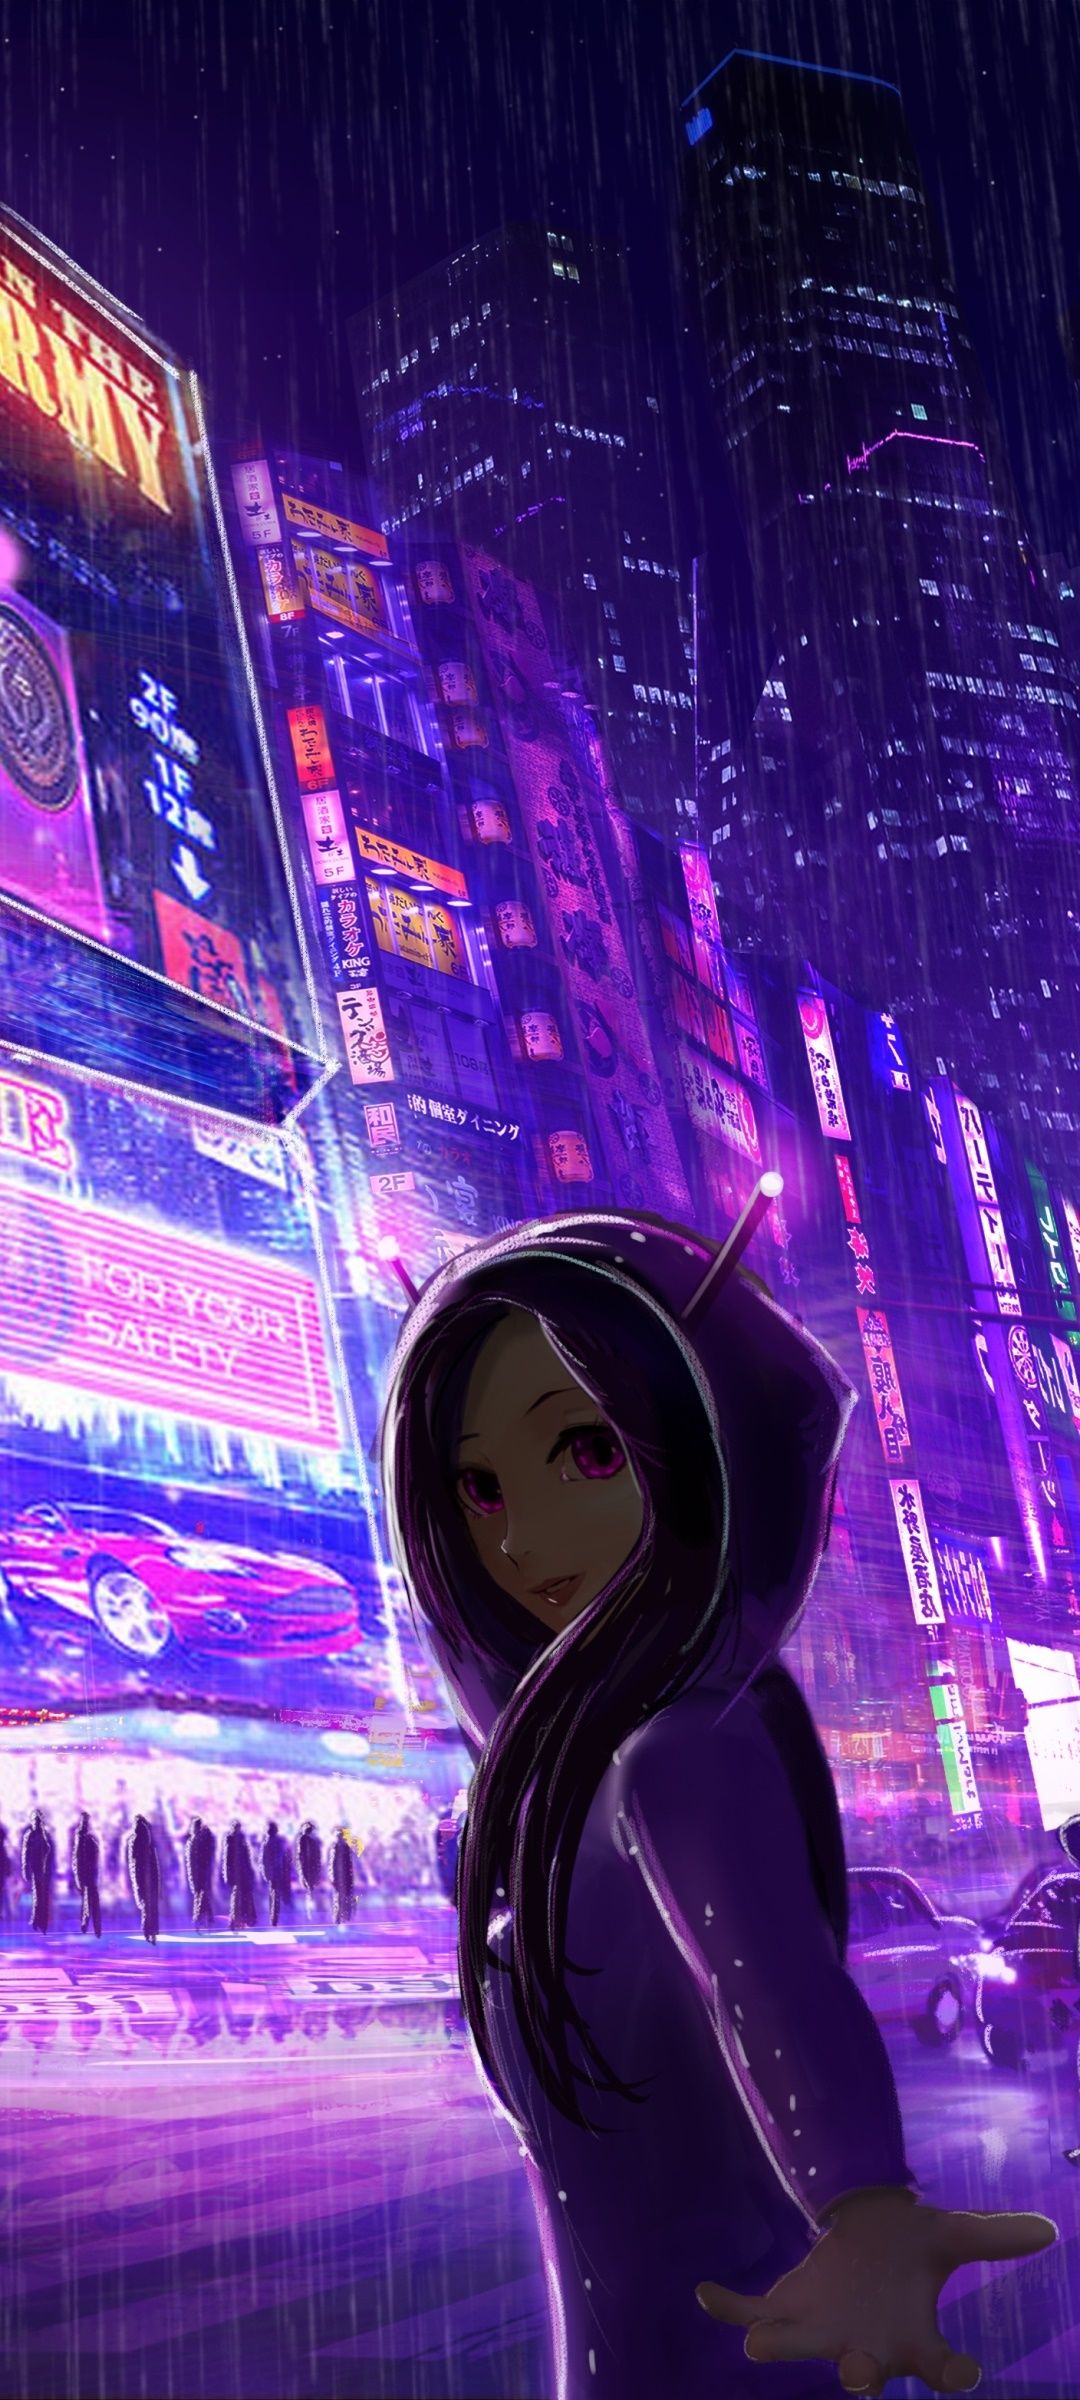 Wallpaper / Anime City Phone Wallpaper, , 1080x2400 free download